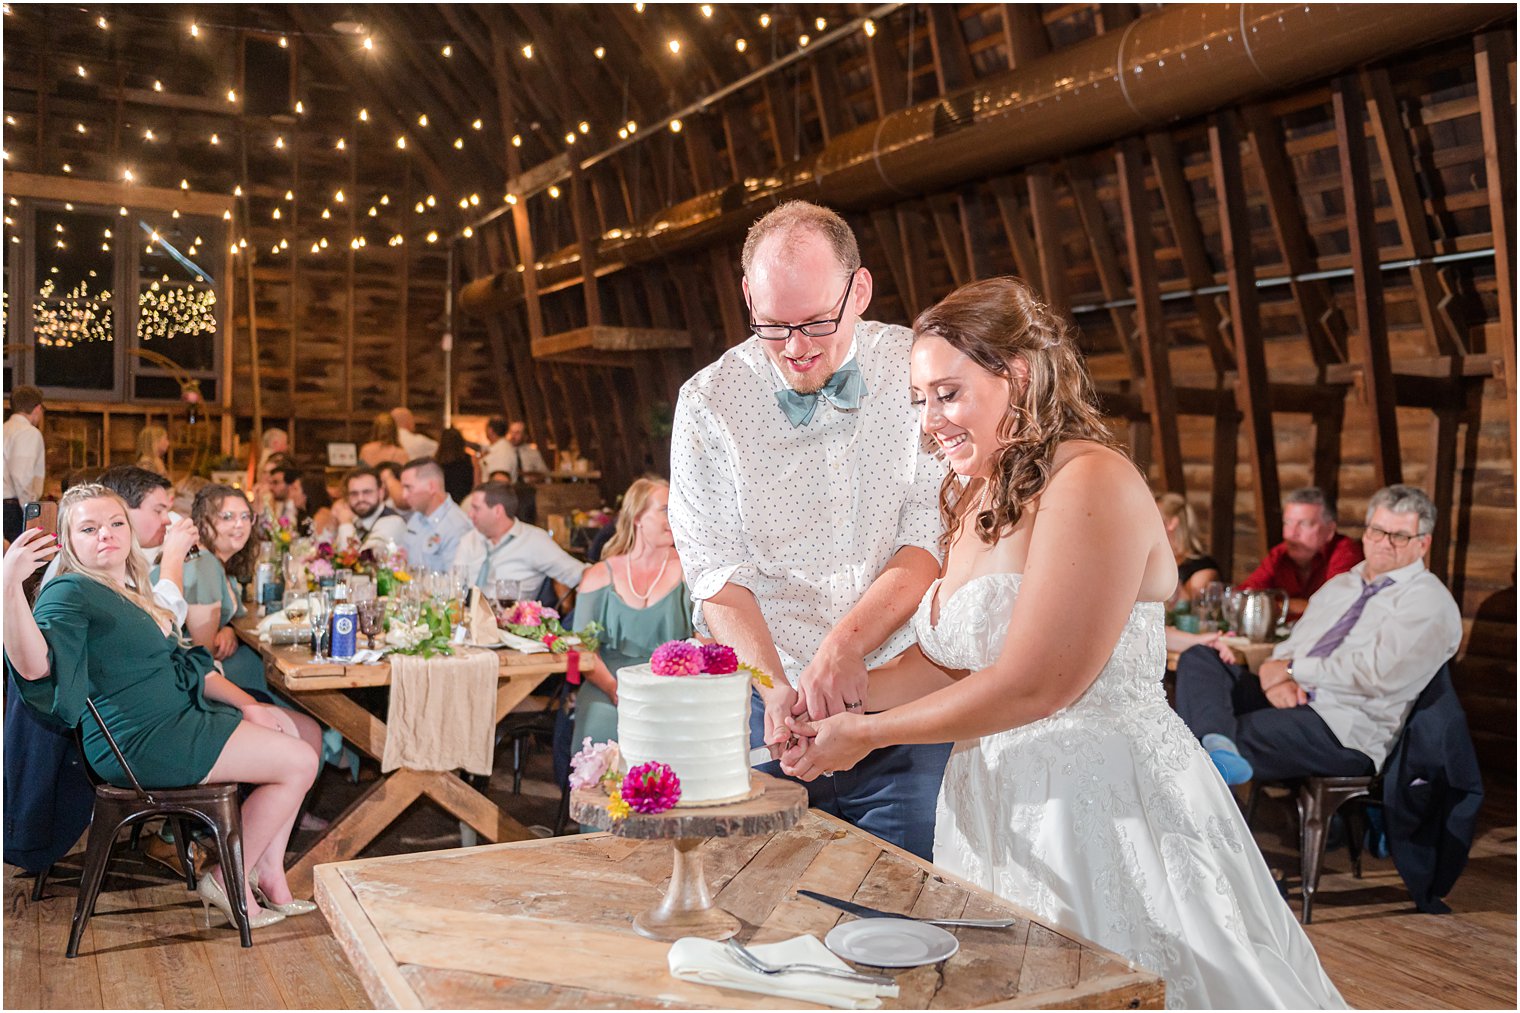 bride and groom cut wedding cake during wedding reception in barn